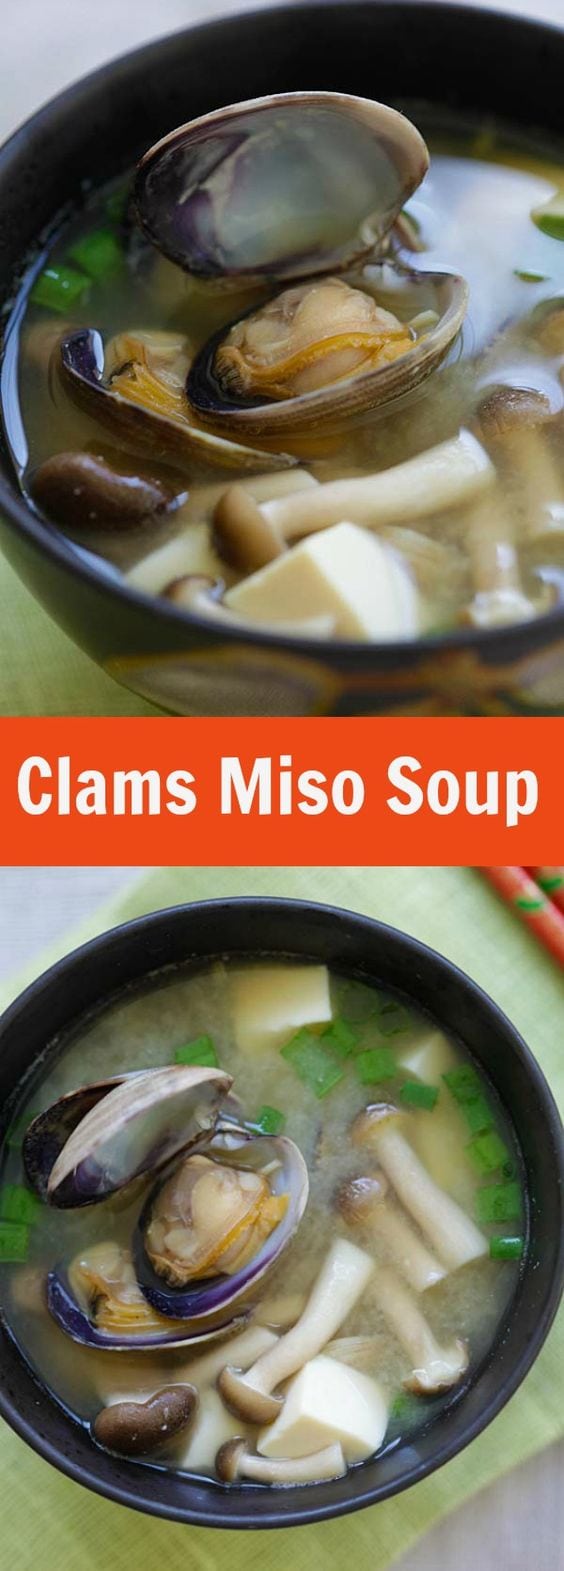 Asari Miso Soup - easy Japanese miso soup with Manila clams. So briny, tasty, done in less than 15 minutes and tastes so good! | rasamalaysia.com